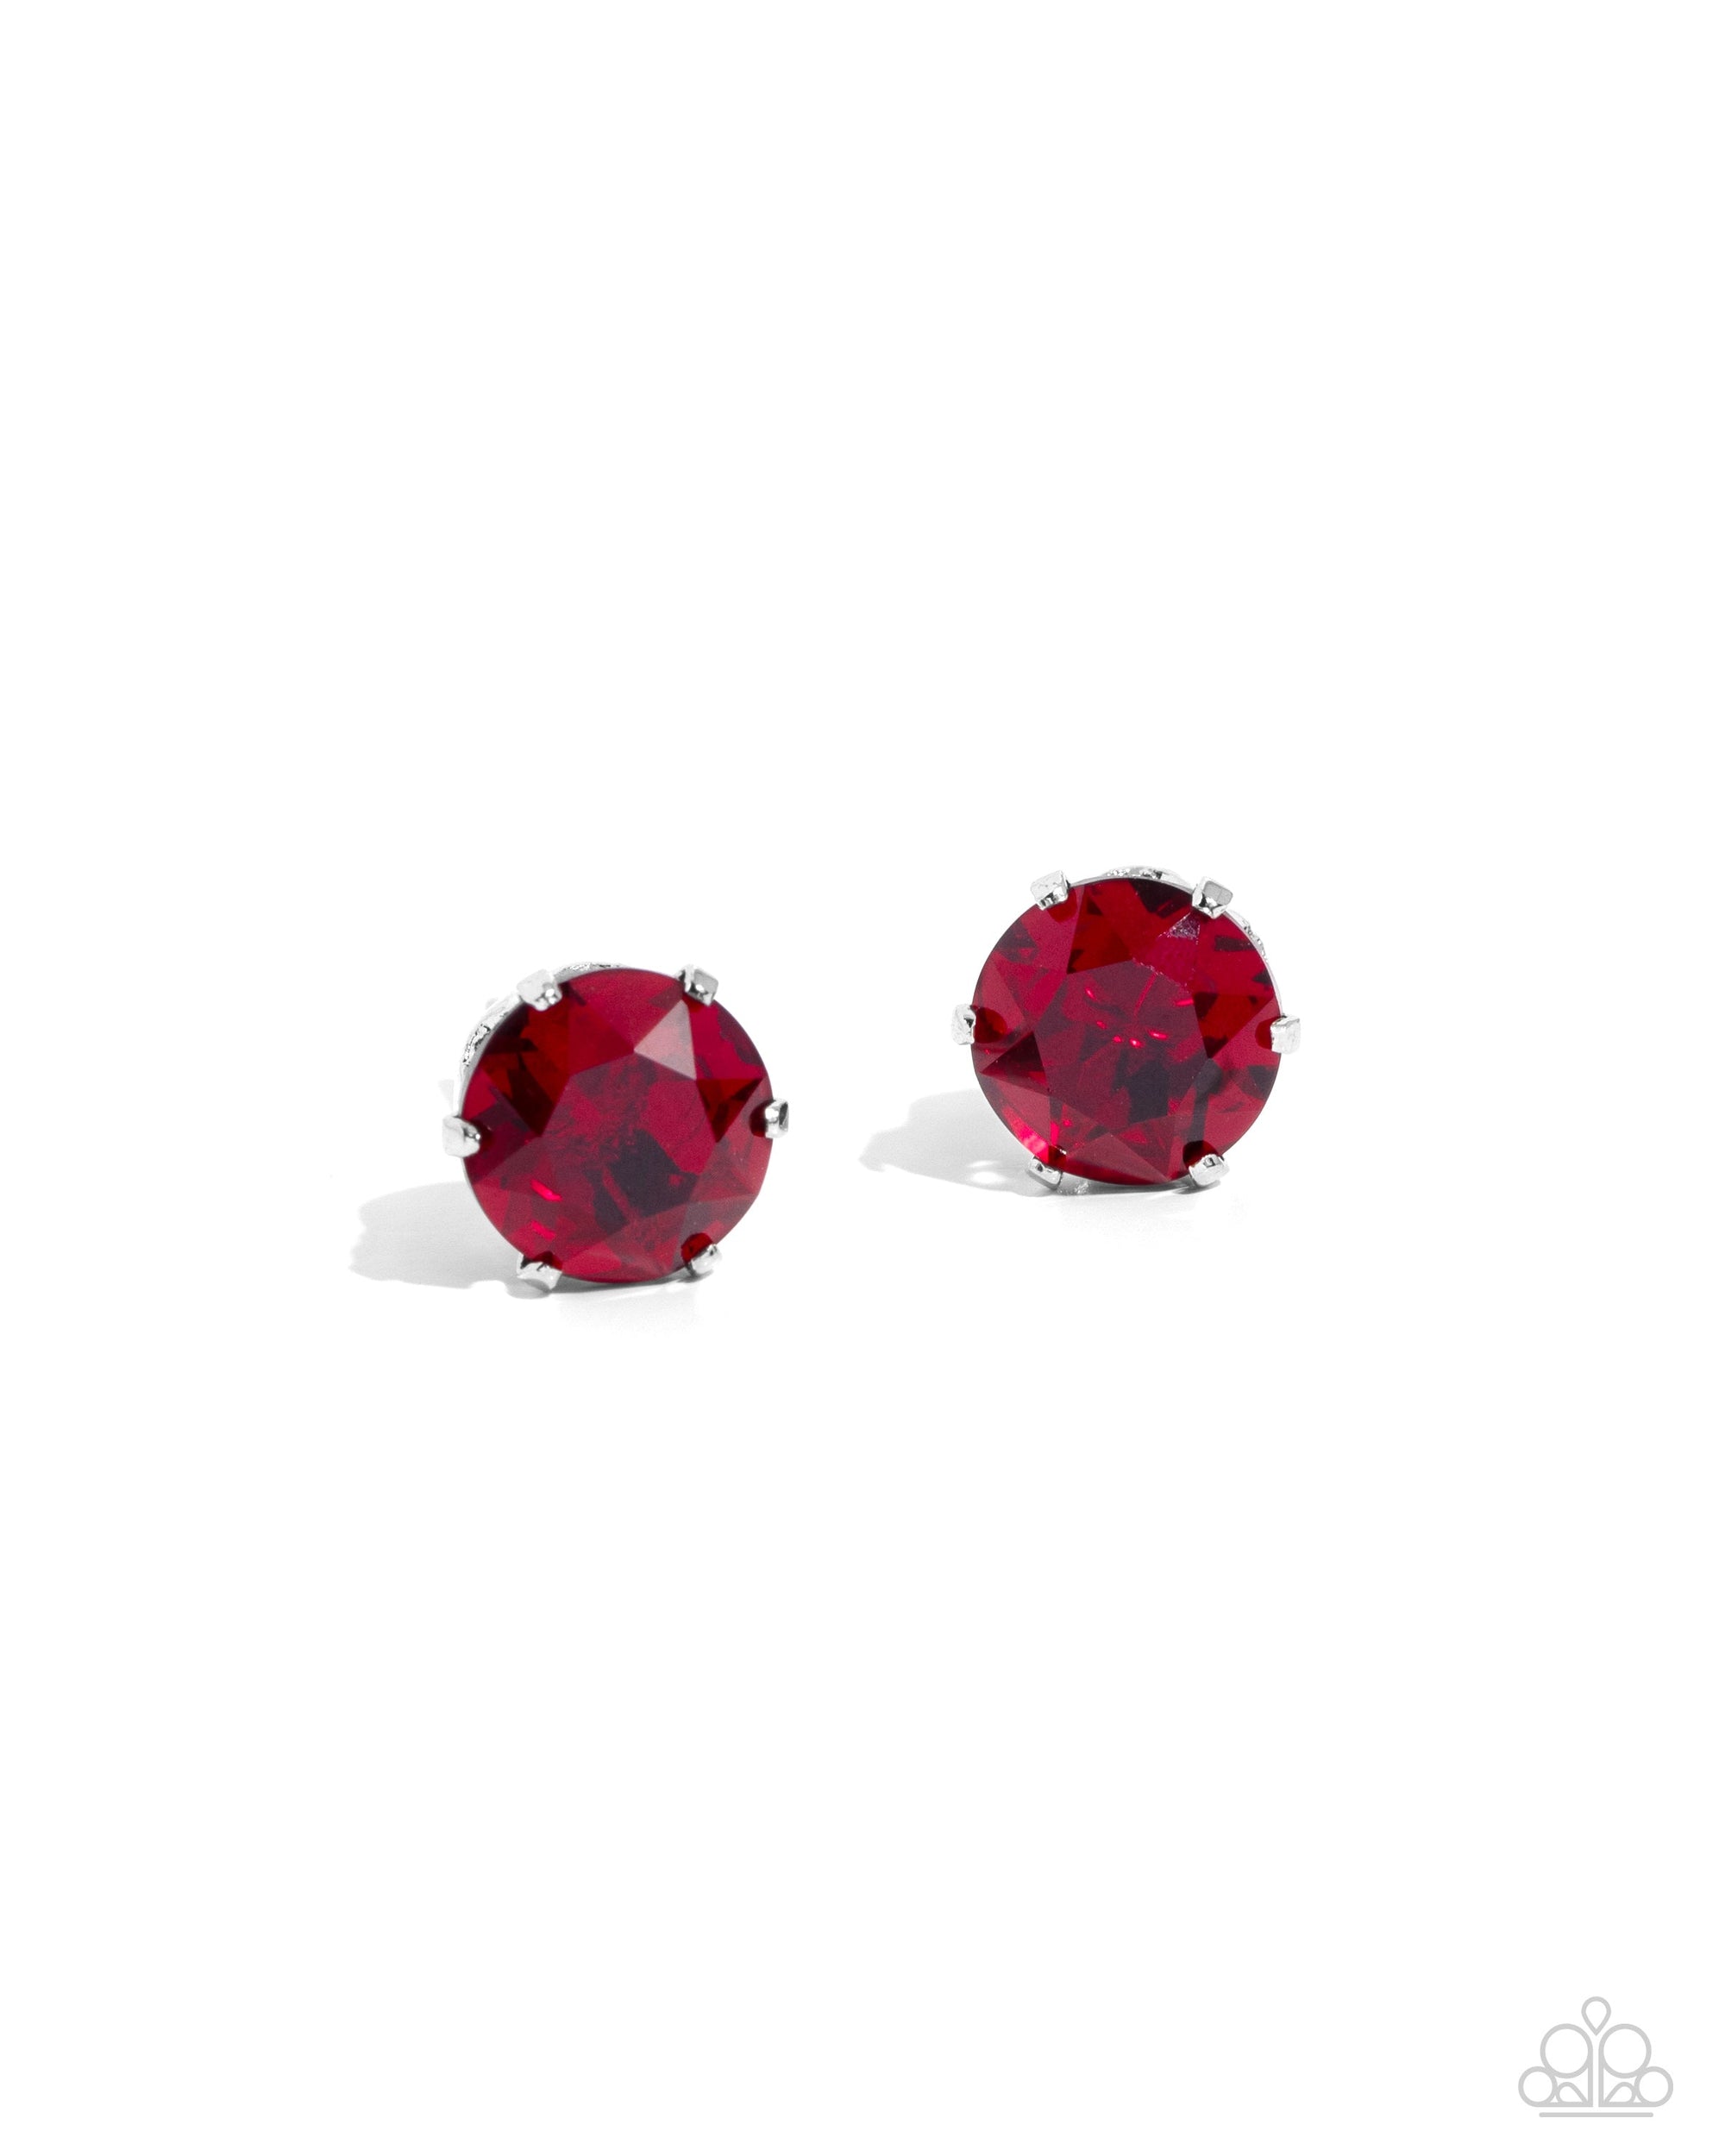 Breathtaking Birthstone (January) Garnet Red Rhinestone Earrings - Paparazzi Accessories- lightbox - CarasShop.com - $5 Jewelry by Cara Jewels